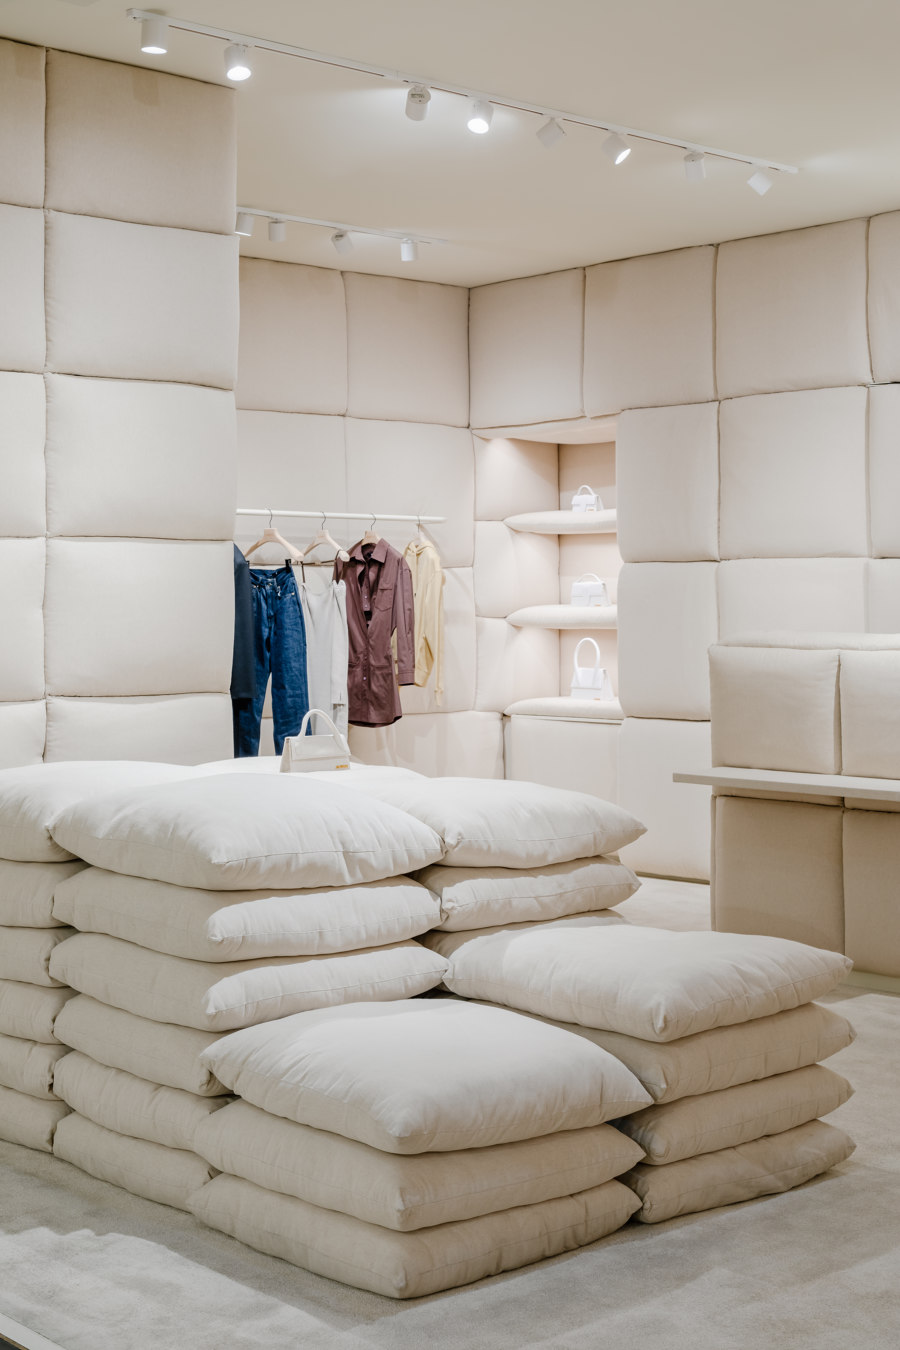 Jacquemus Store by AMO | Shop interiors